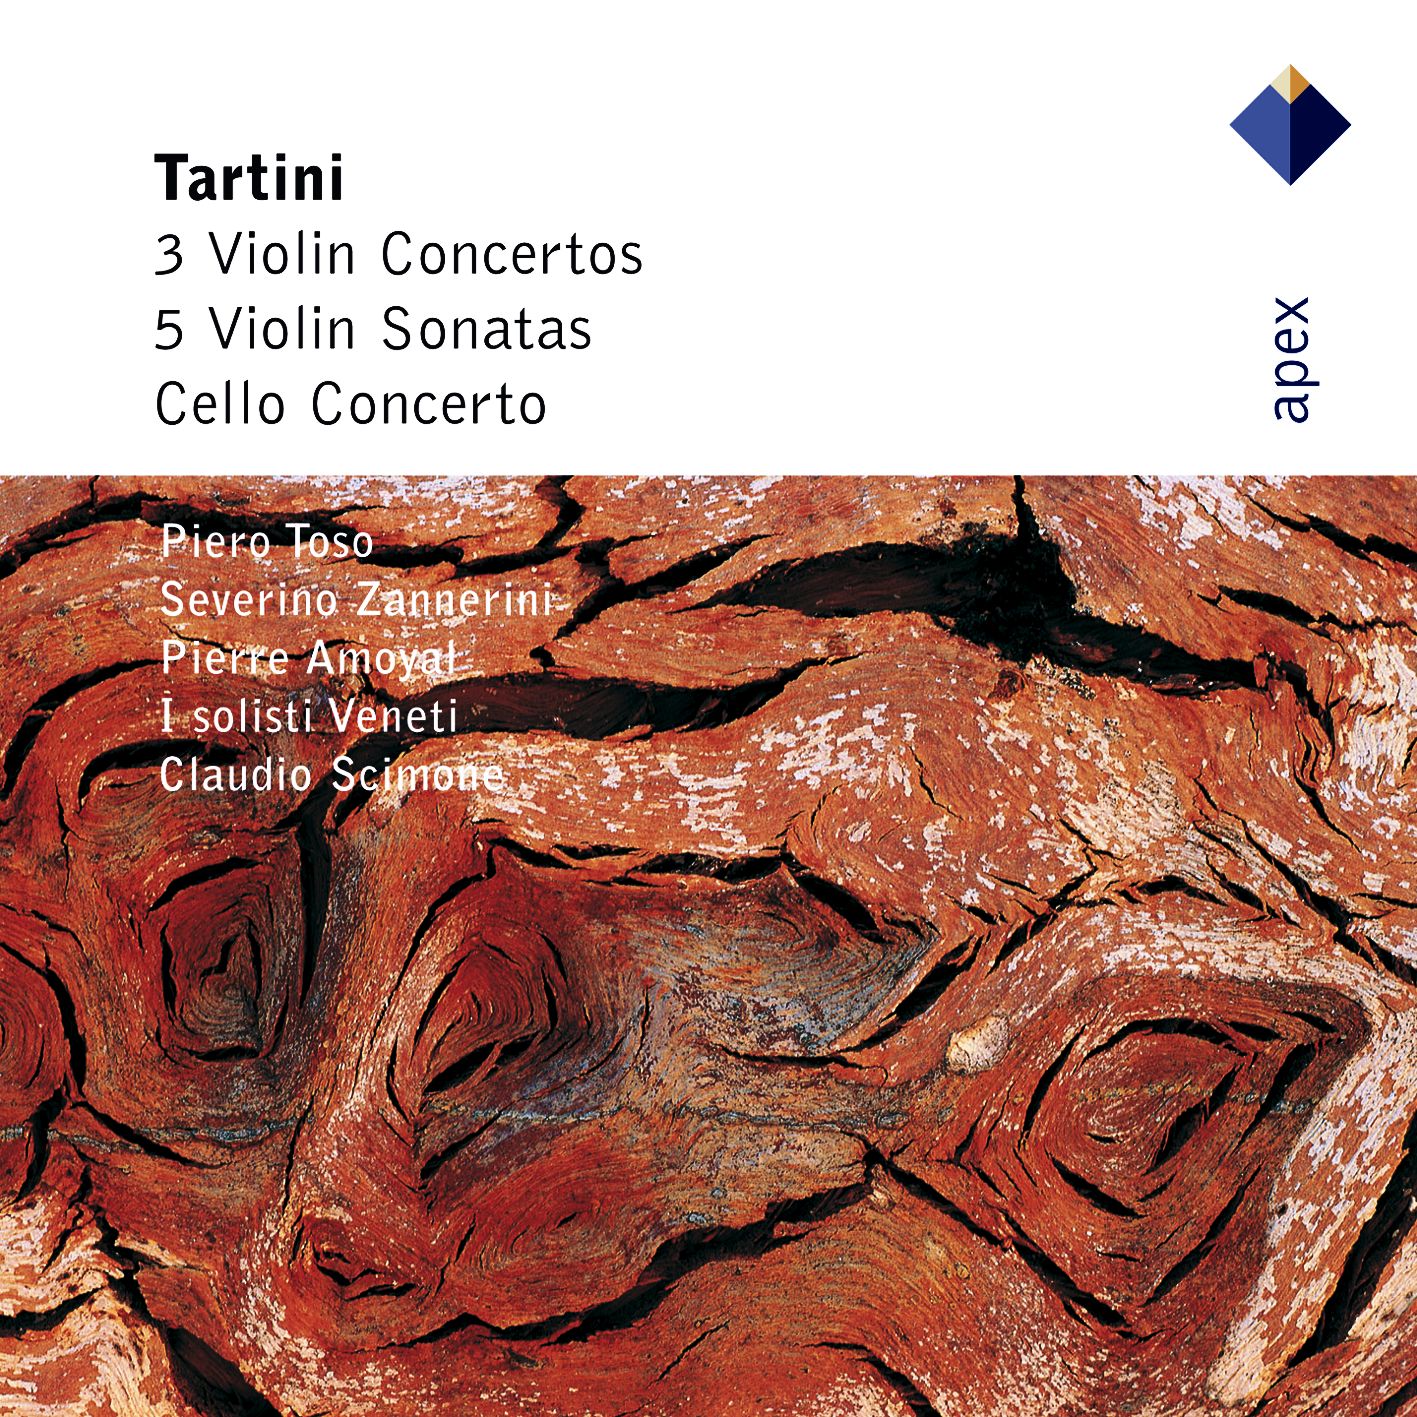 Tartini : Violin Sonata in A major Op.1 No.1 : III Adagio